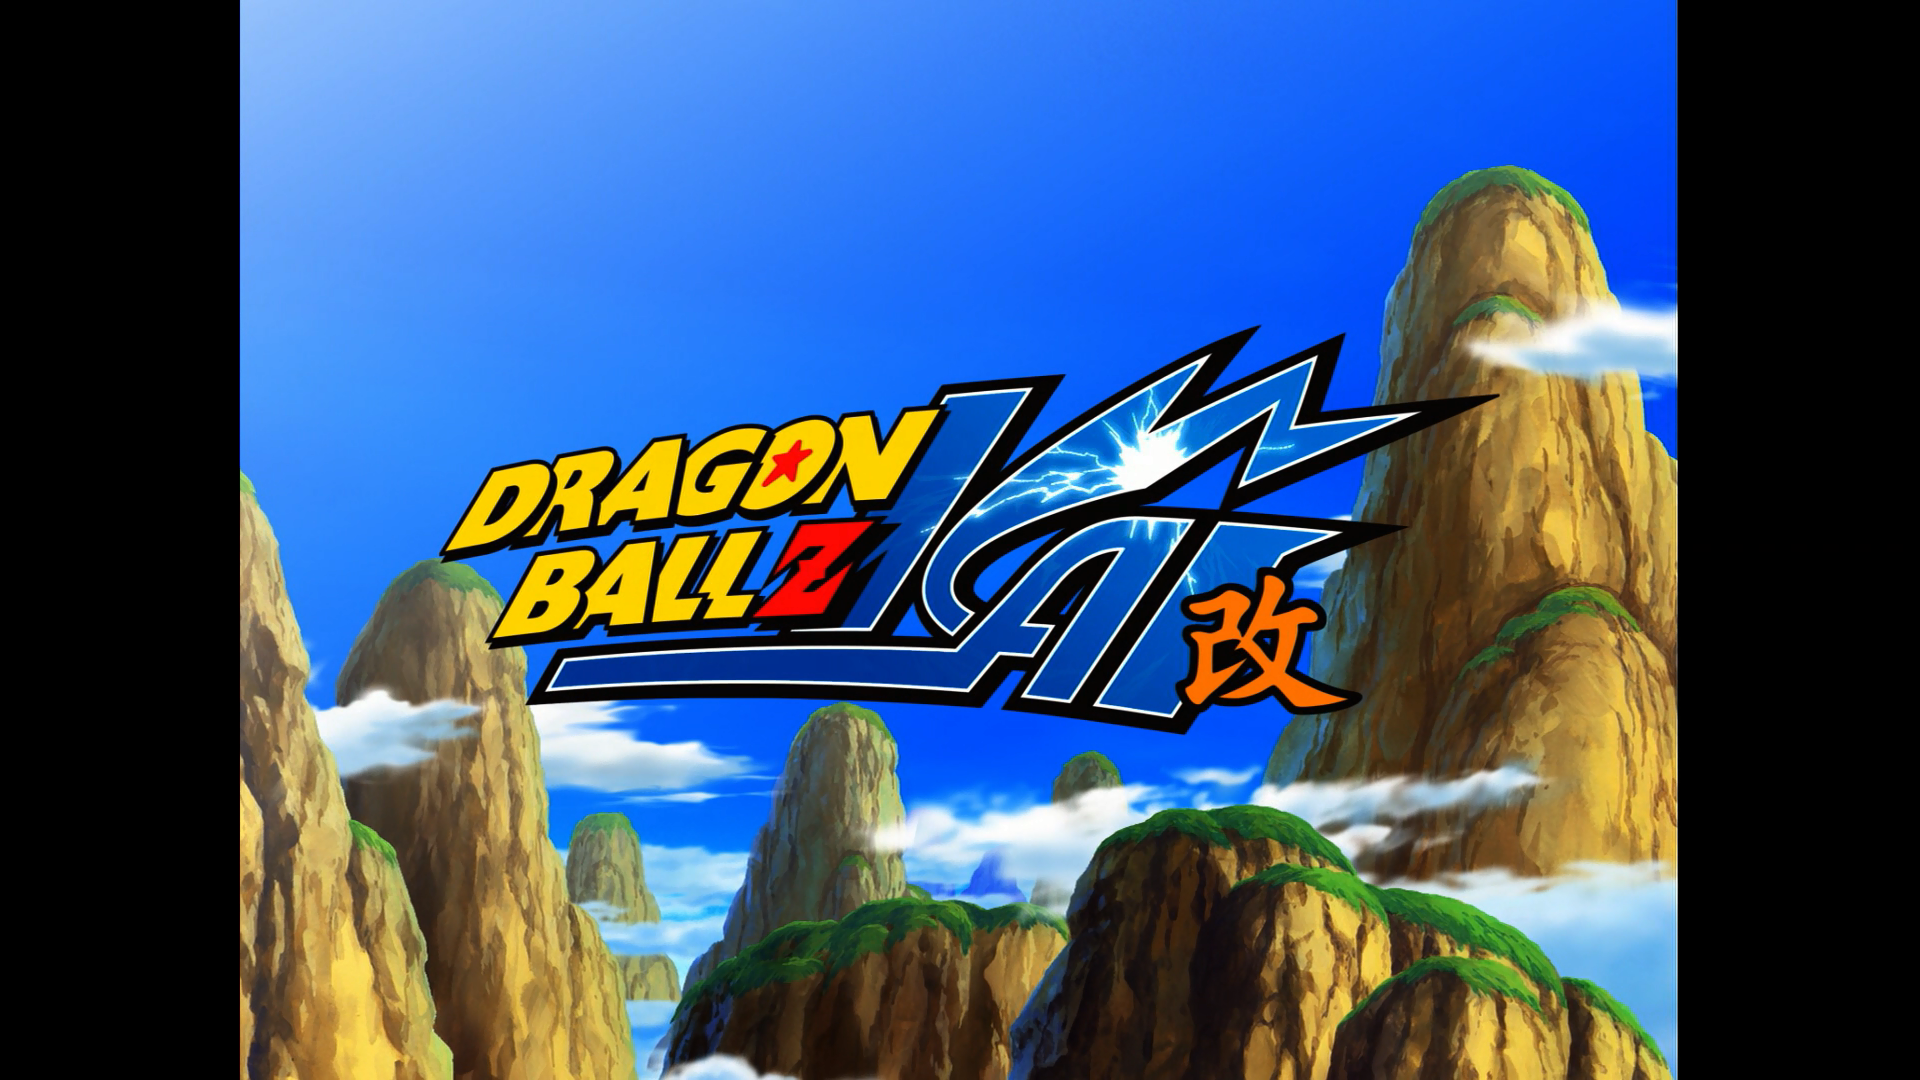 Dragon Ball Z Sagas - DBZS - Os Androides - Saga Android(Full HD) 